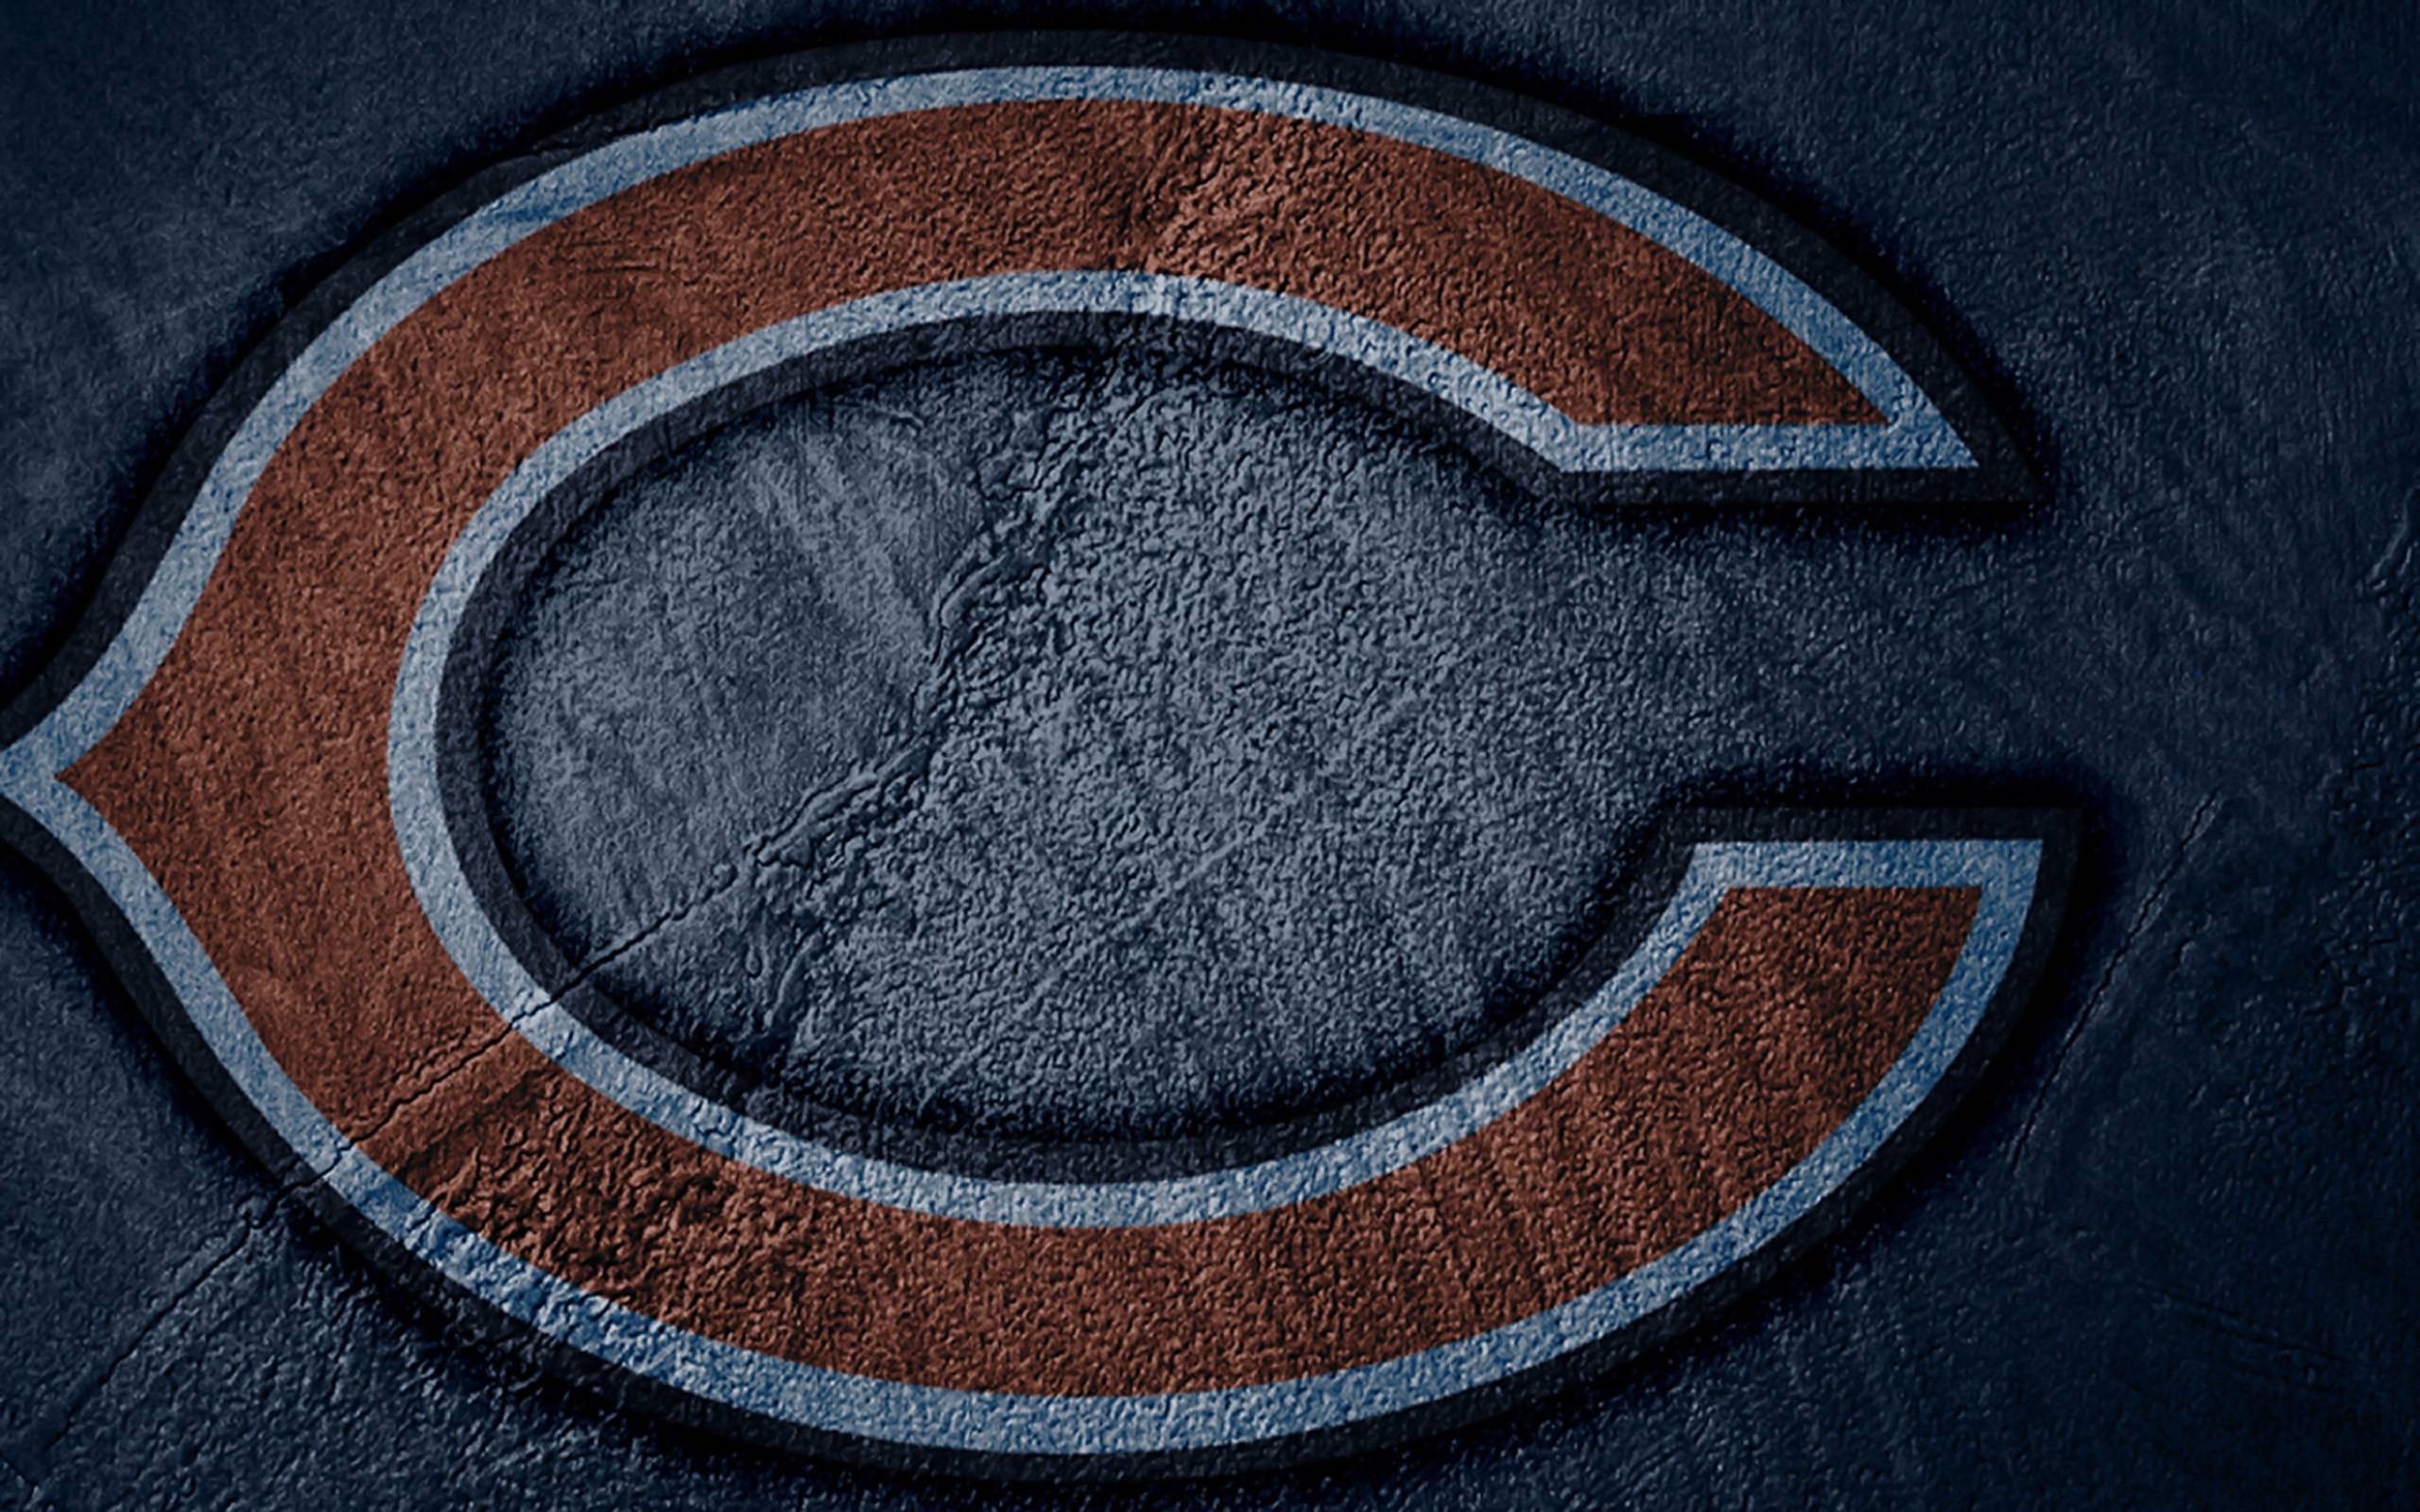 Chicago Bears Soldier Field, Desktop And Mobile Wallpaper taken